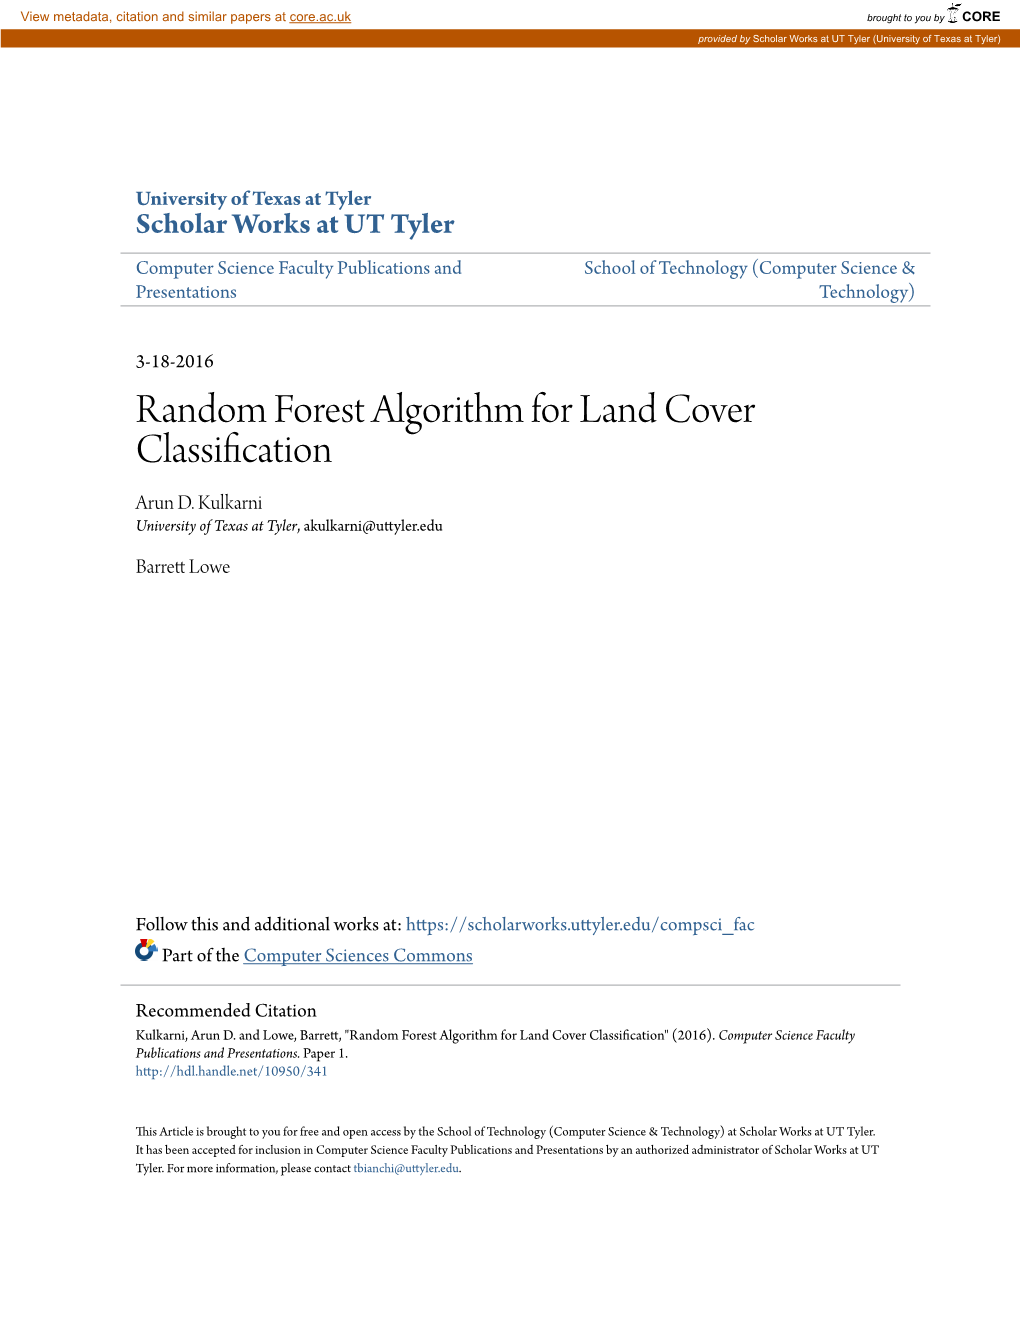 Random Forest Algorithm for Land Cover Classification Arun D